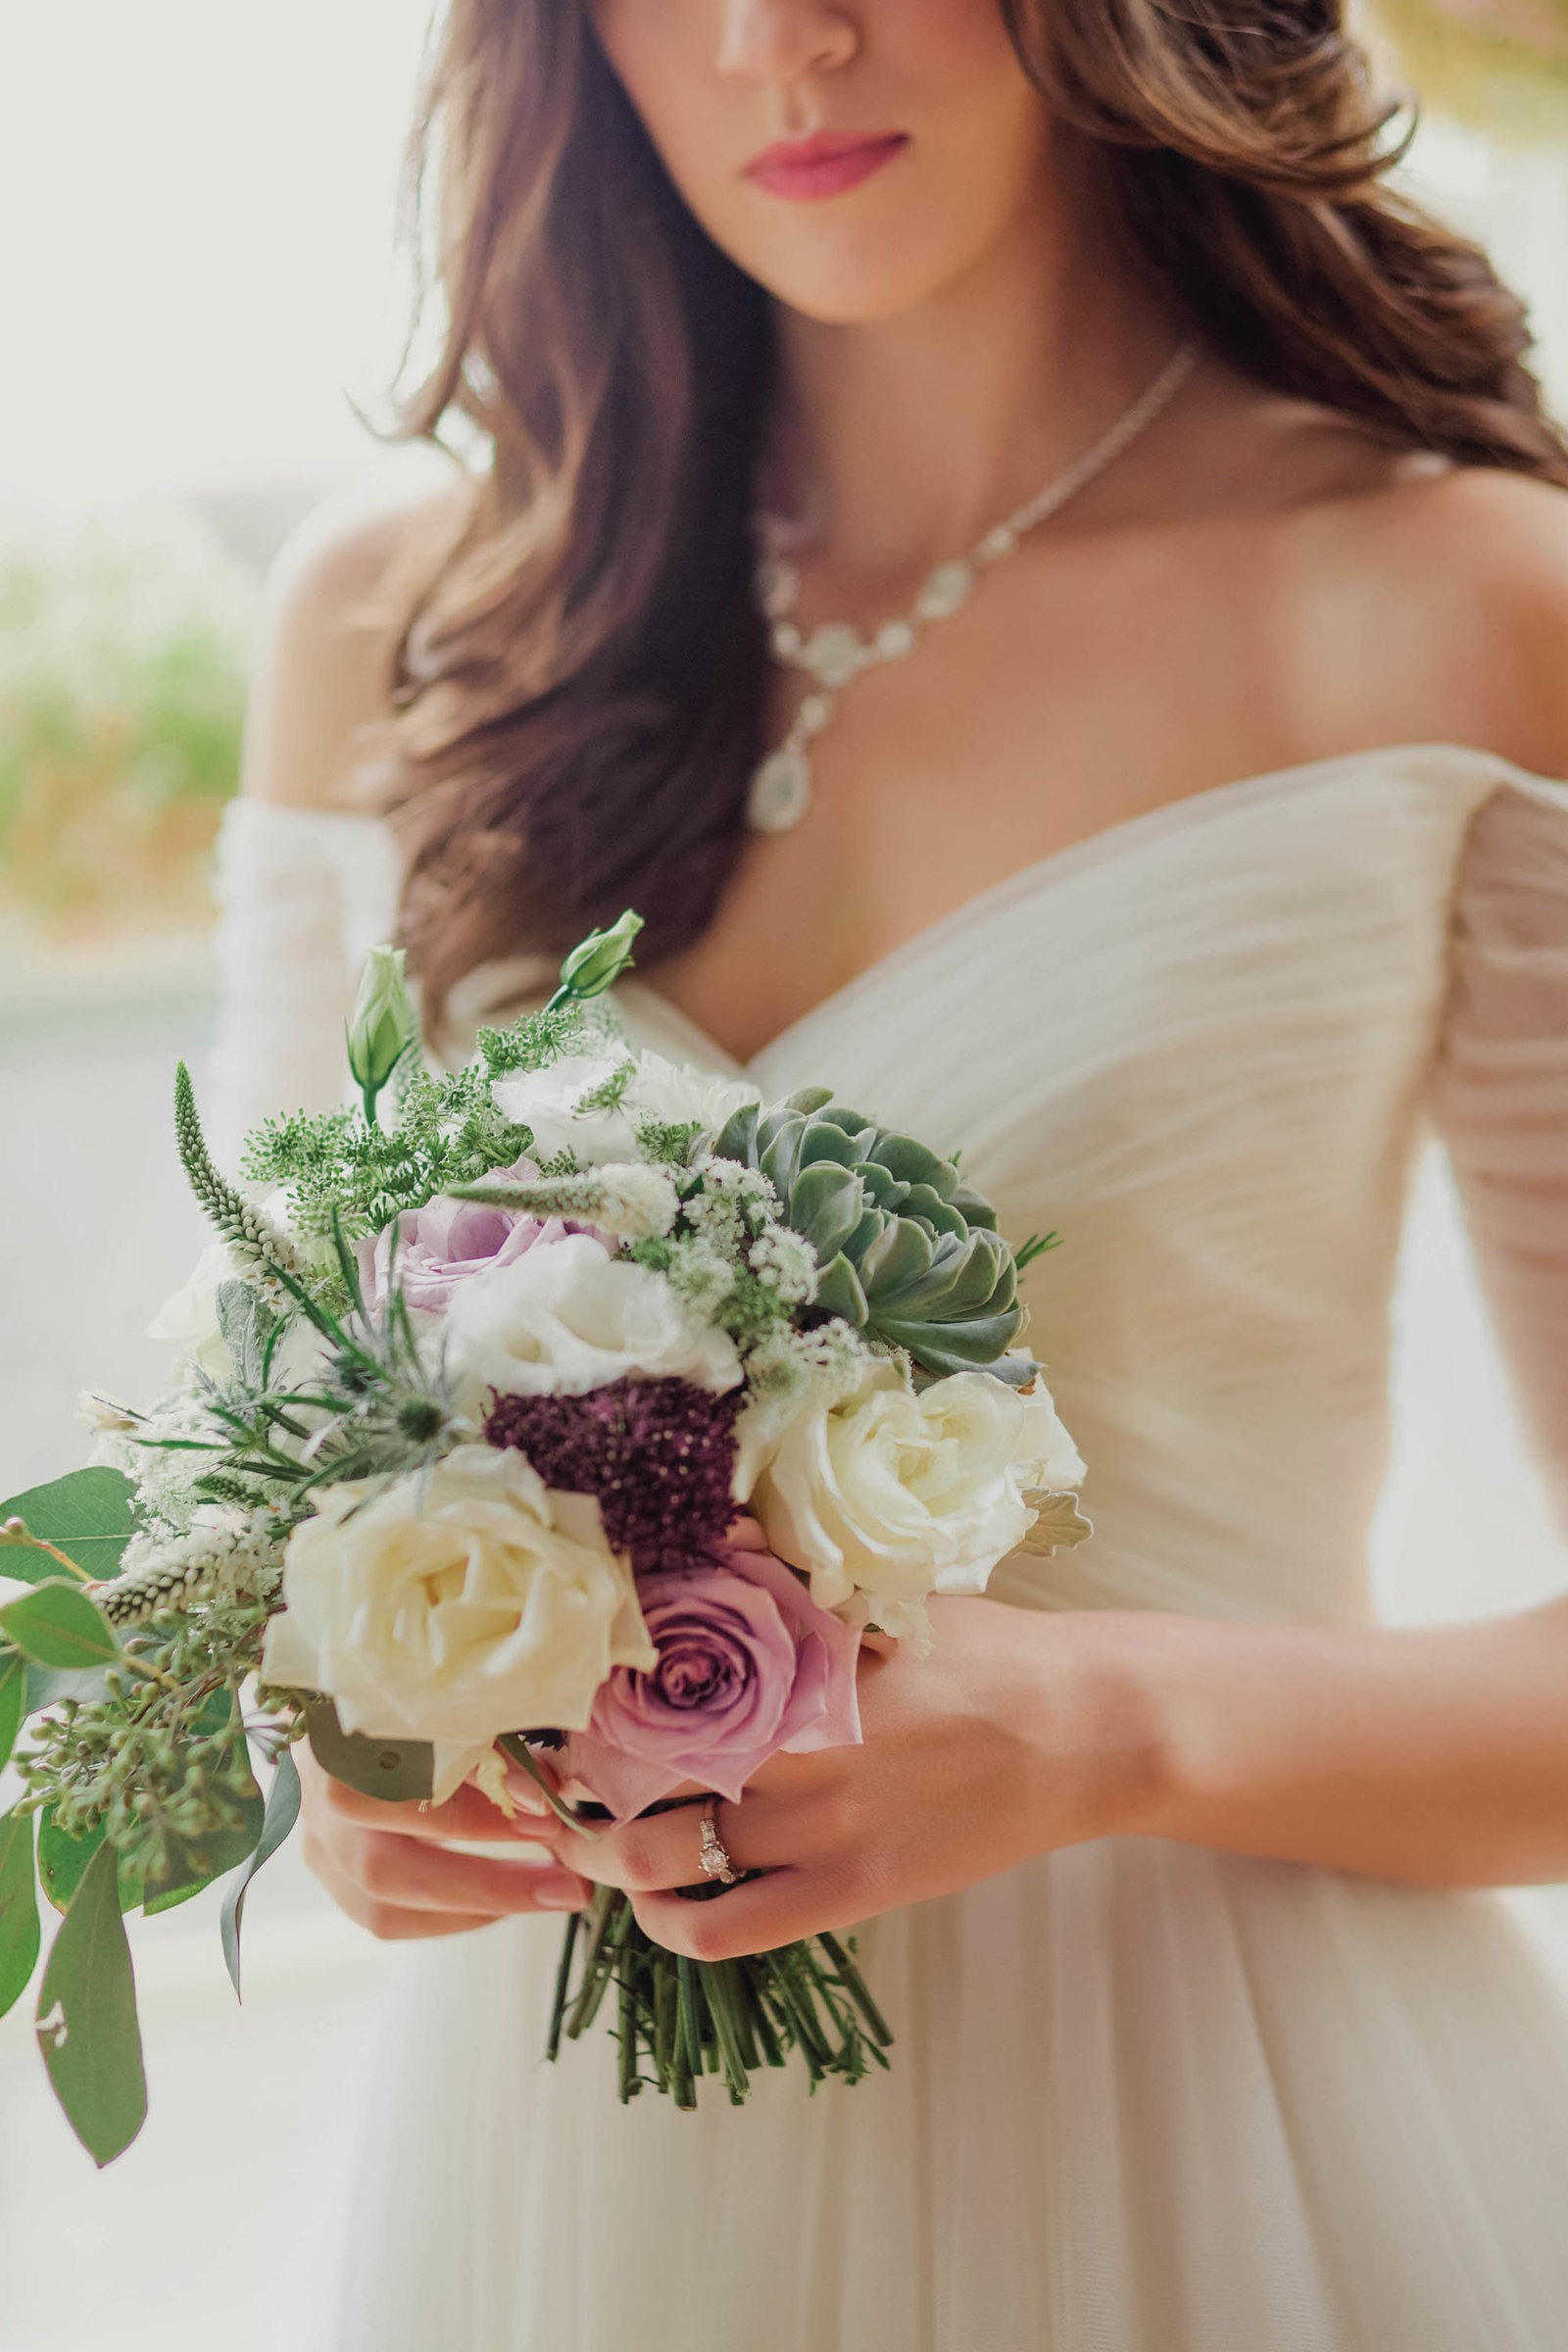 bouquet-spring-bridal-lookbook-fashion-editorial-glamour-grace-blog-published-rosa-clara-francesca-miranda-jenny-packham-mma-agency-kate-timbers123